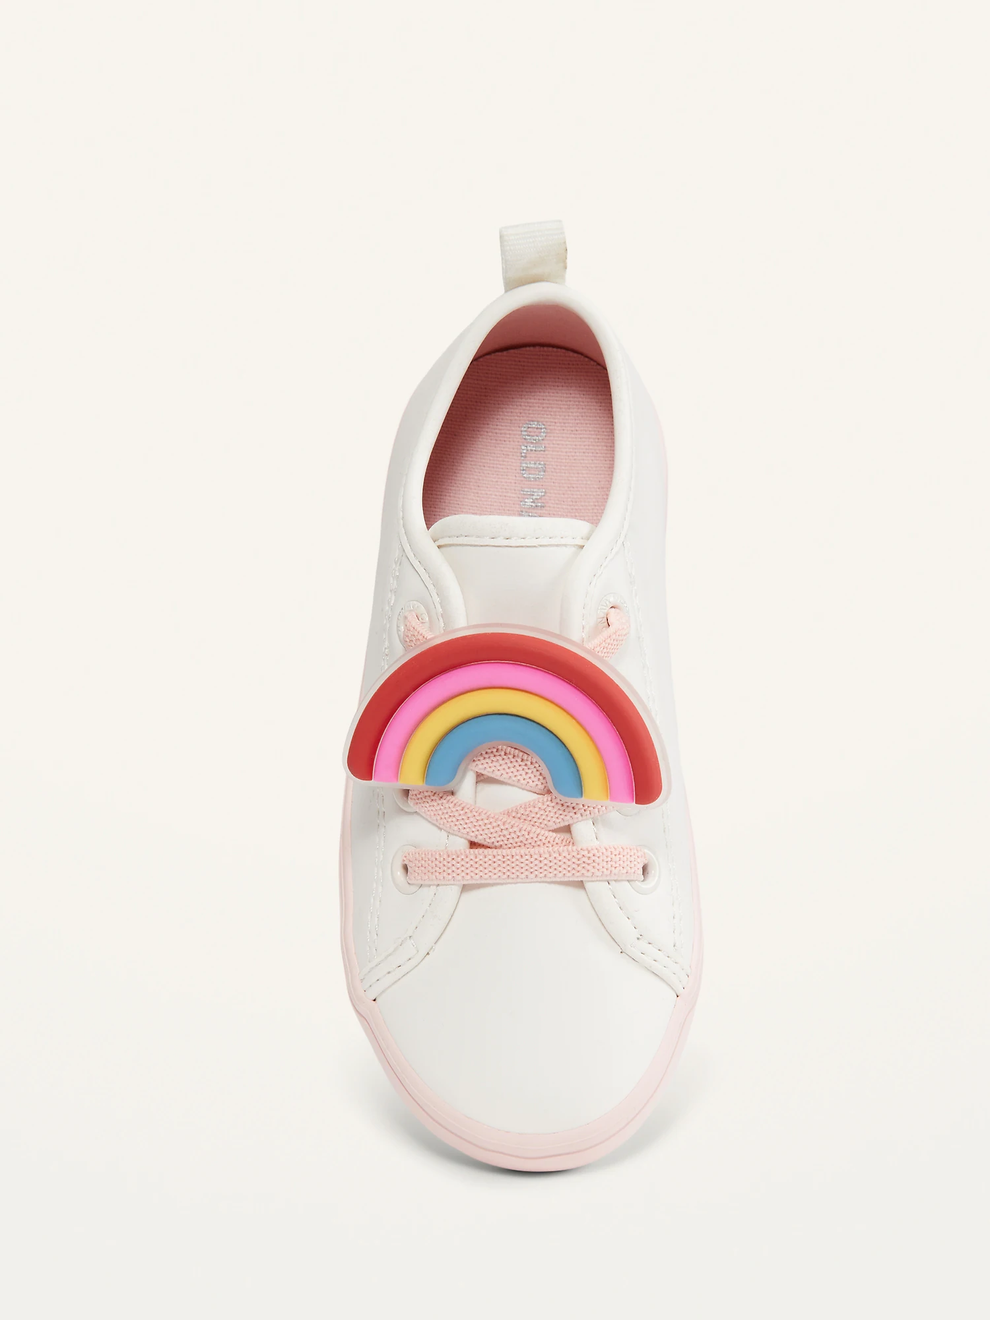 Zapatos Old Navy Rainbow